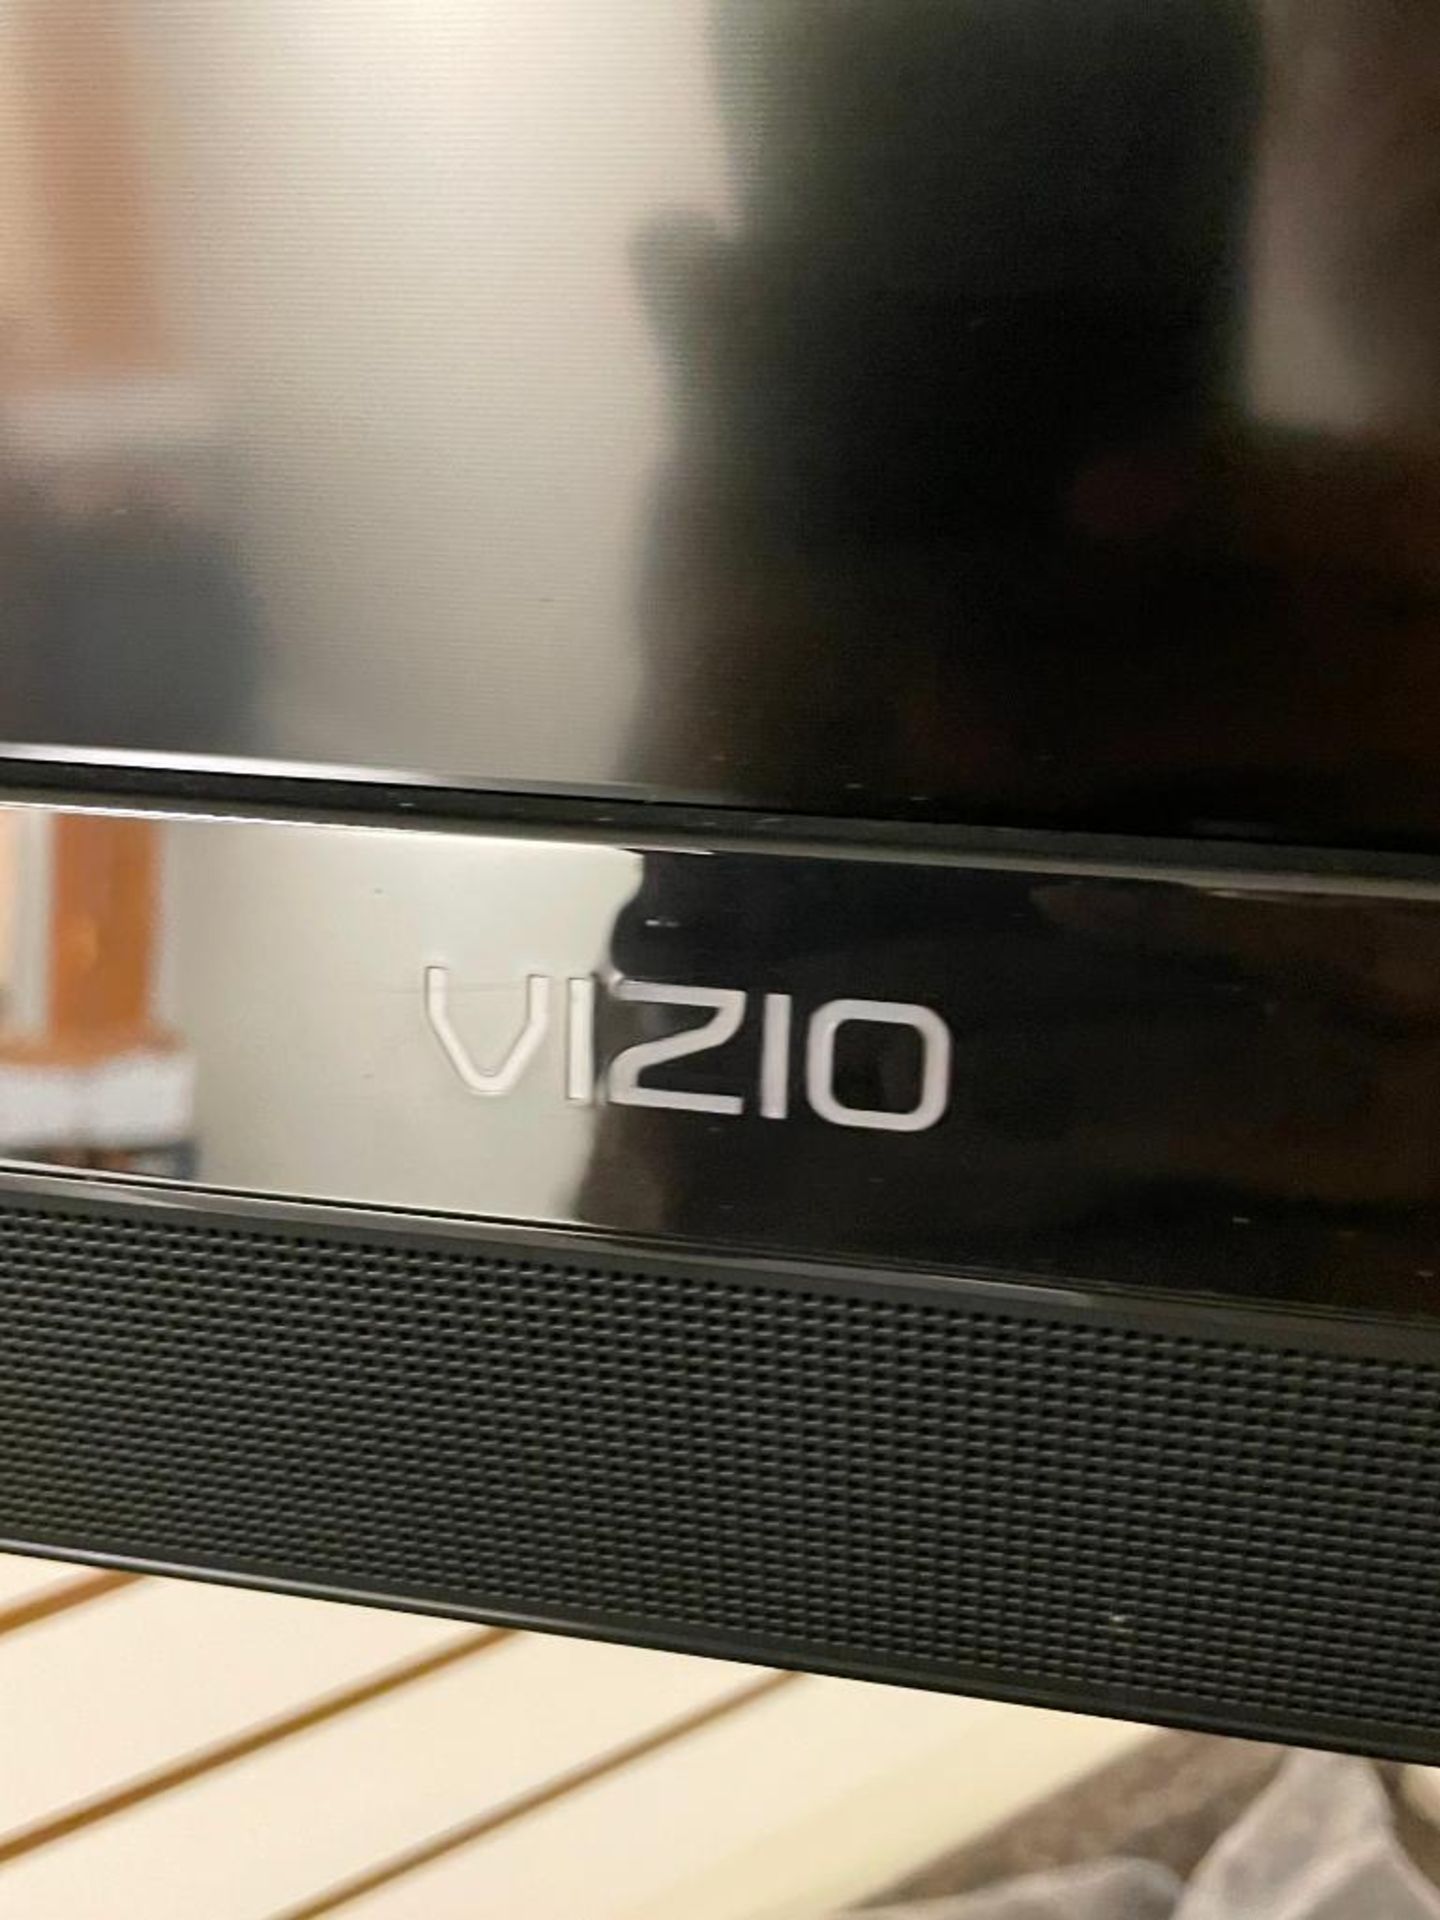 Vizio TV - Image 4 of 4